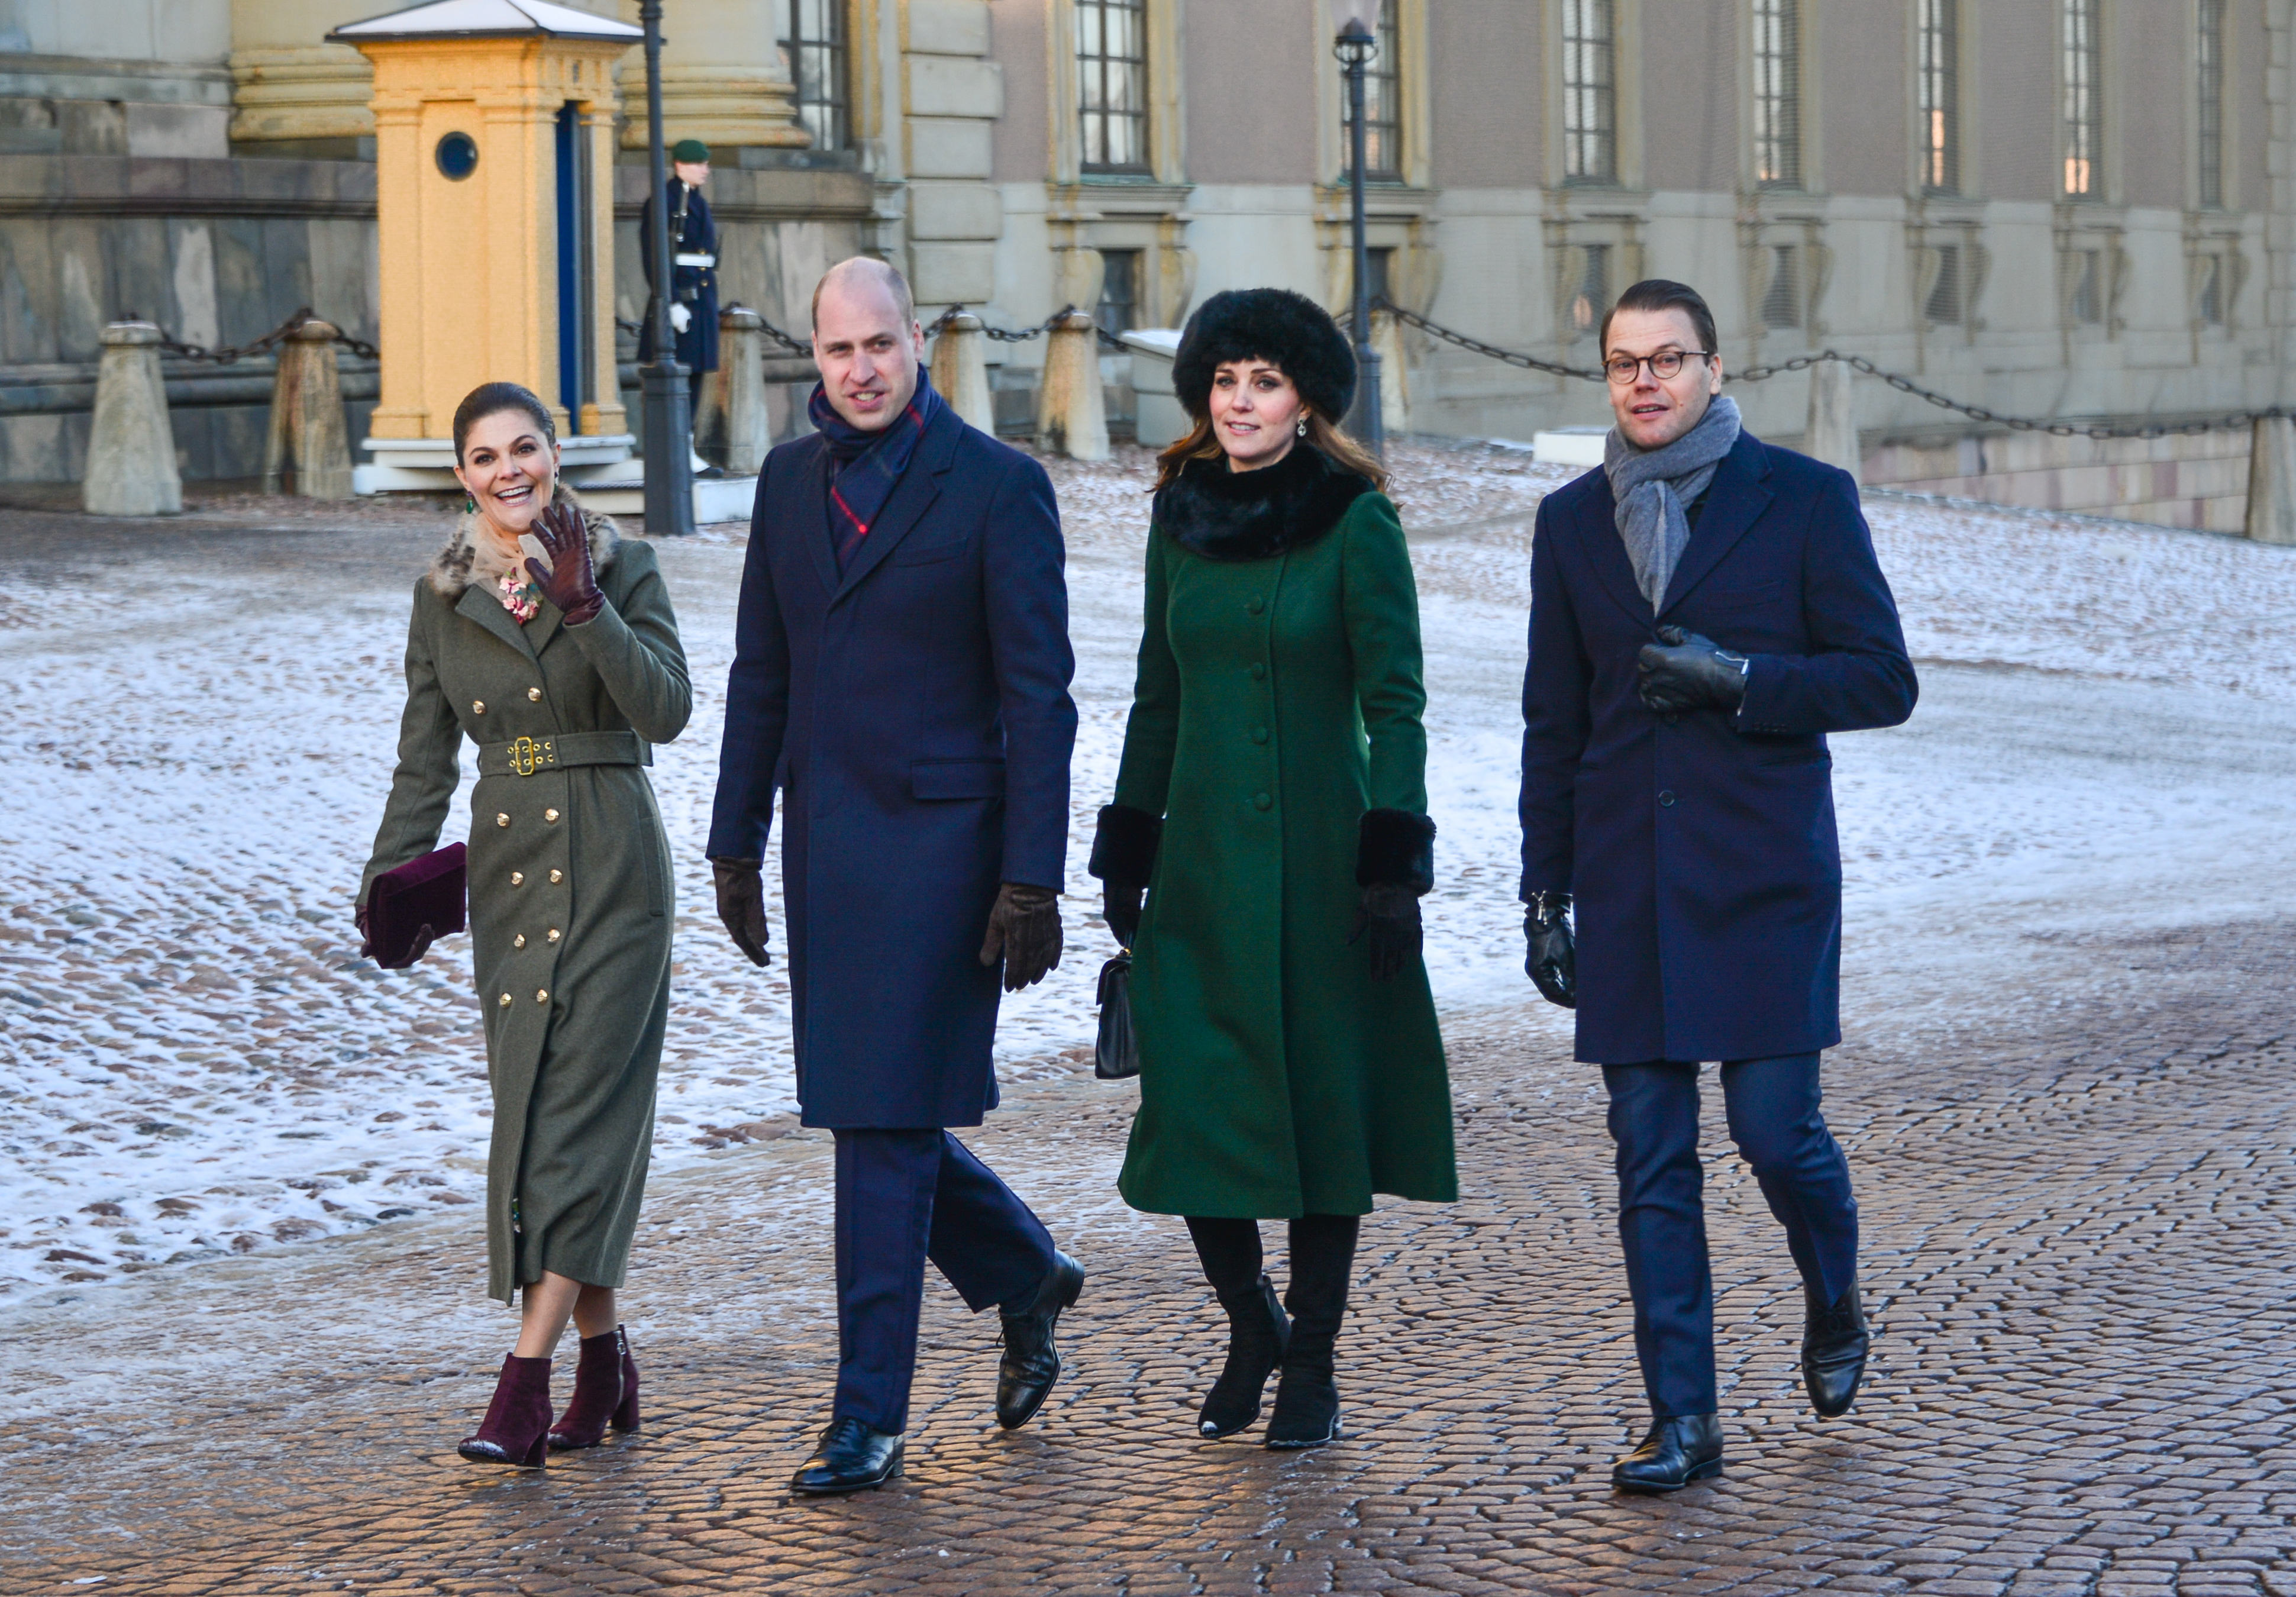 Herzogin von Cambridge heute in Kopenhagen!